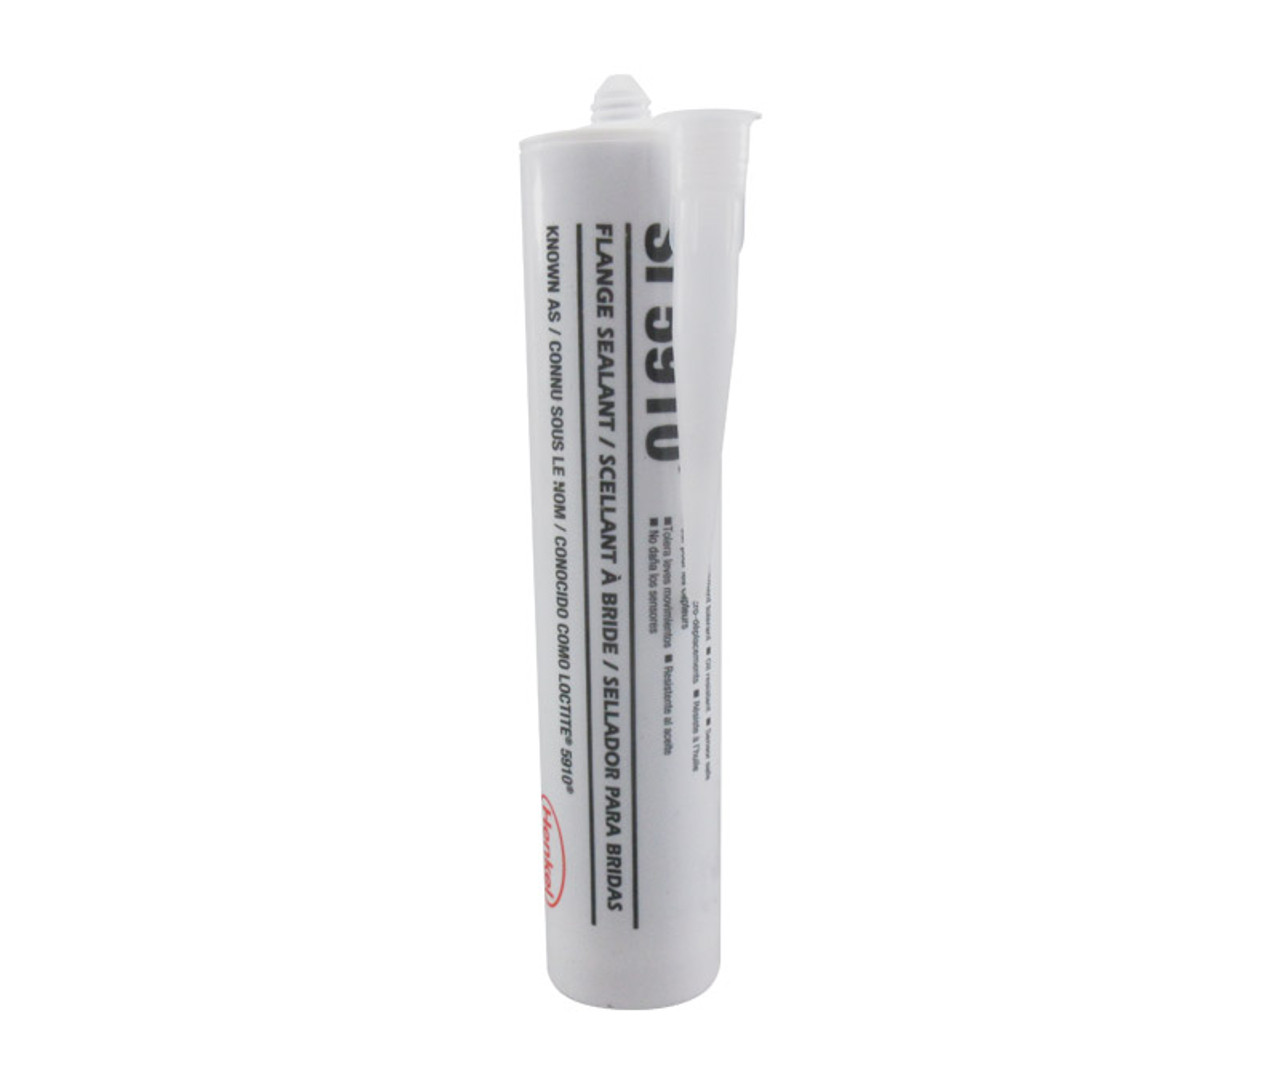 Loctite 231232 5910 Low Odor Low Volatility Non-Corrosive Flange Sealant,  300 mL Cartridge